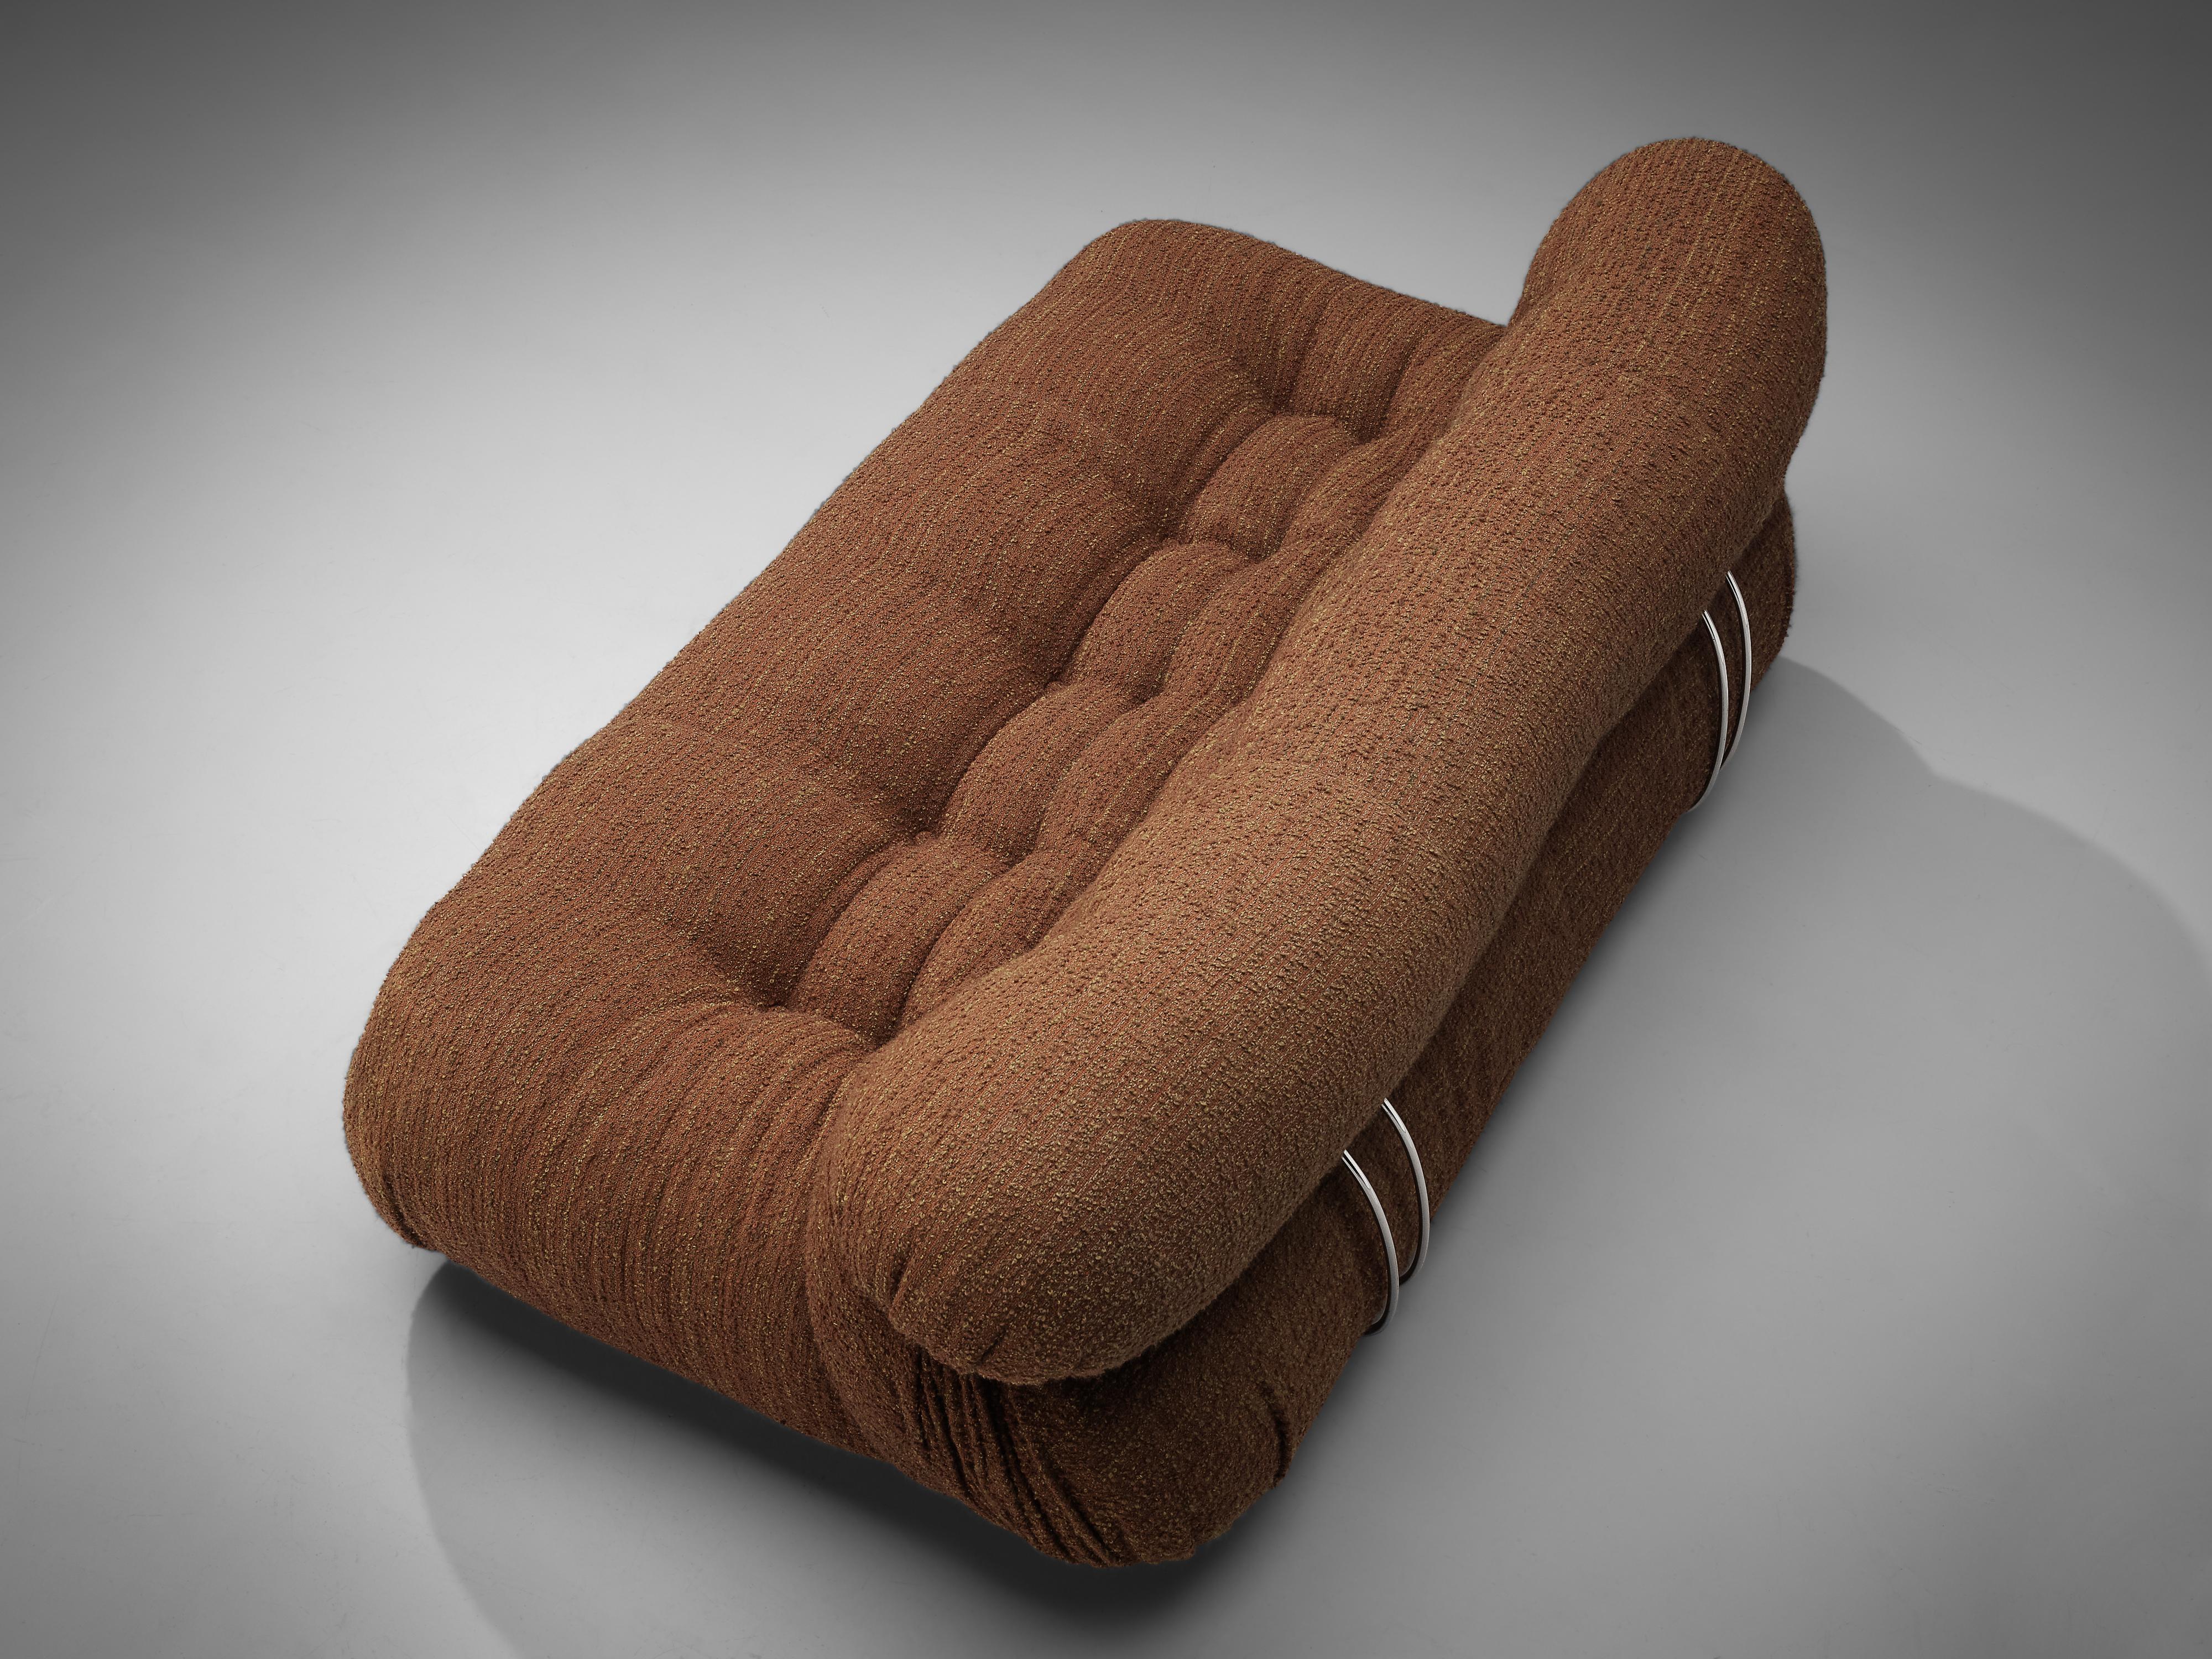 Afra & Tobia Scarpa 'Soriana' Sofa in Textured Brown Fabric 1